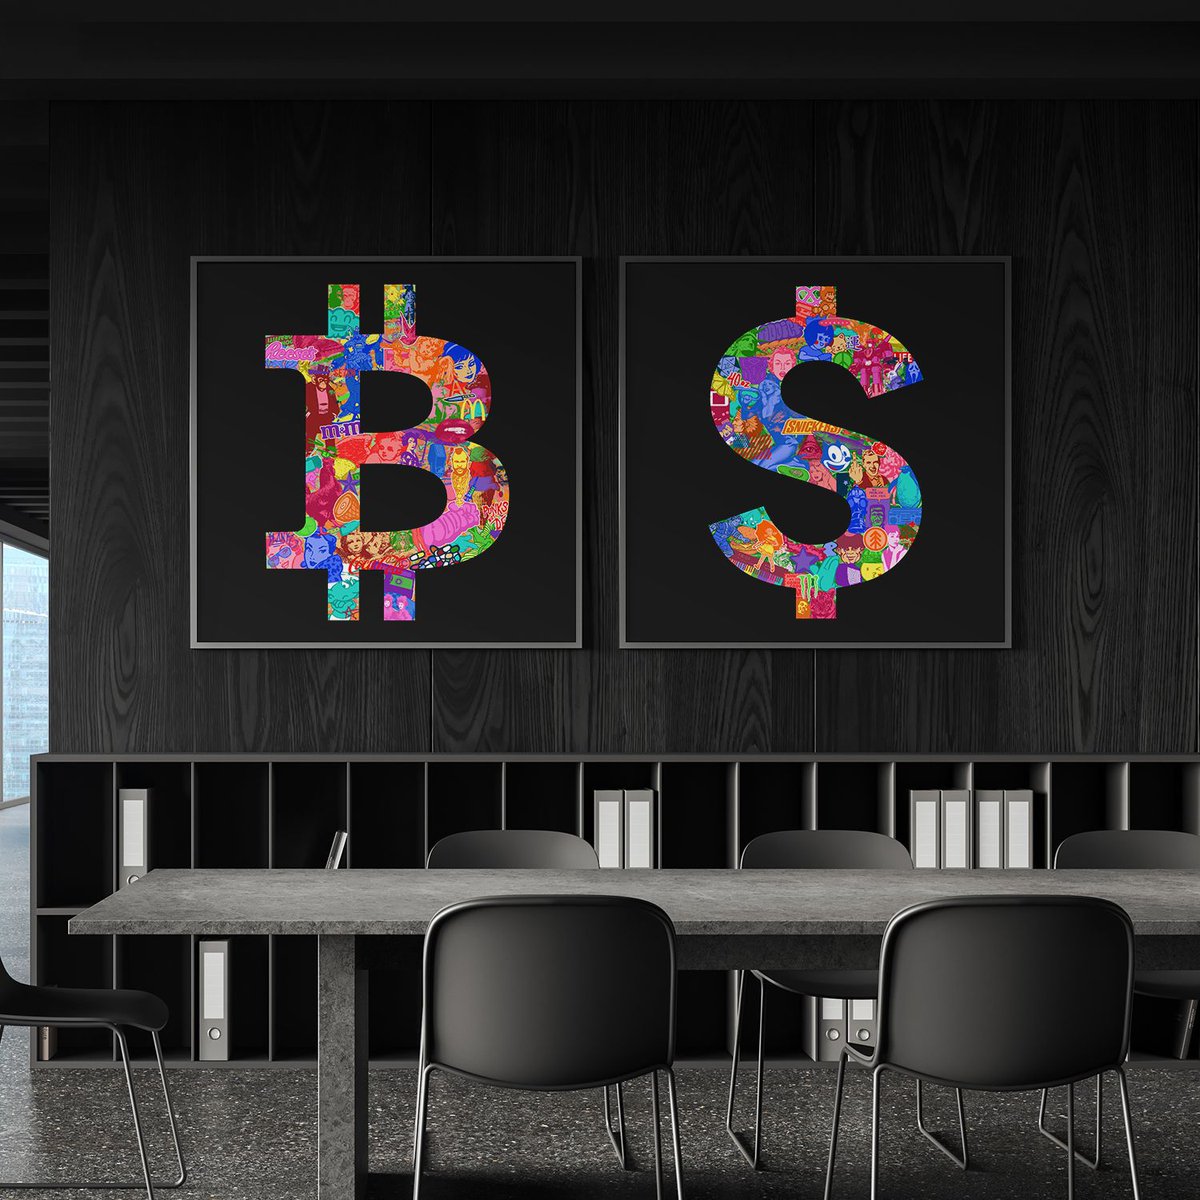 The Bitcoin and Dollar Pop Art Collage is a visually stunning artwork that combines cryptography with pop art. 
.
#popart #bitcoinart #dollarart #collageart #cryptoartwork #digitalartwork #buynow #artdecor #uniqueart #cryptocurrencyart #art #artist #artwork #modernart